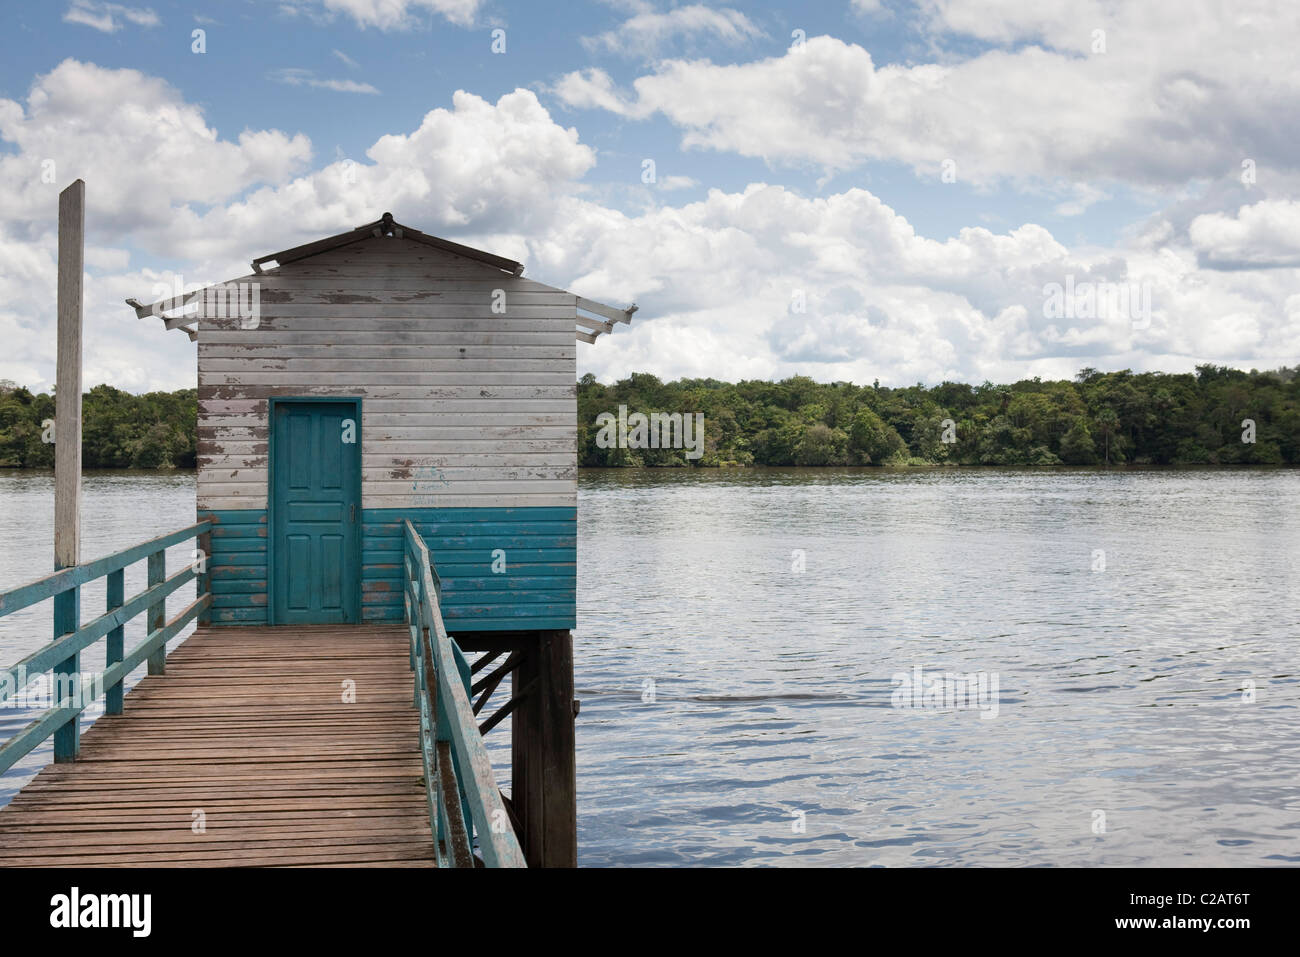 South America, Amazon, stilt house on river Stock Photo